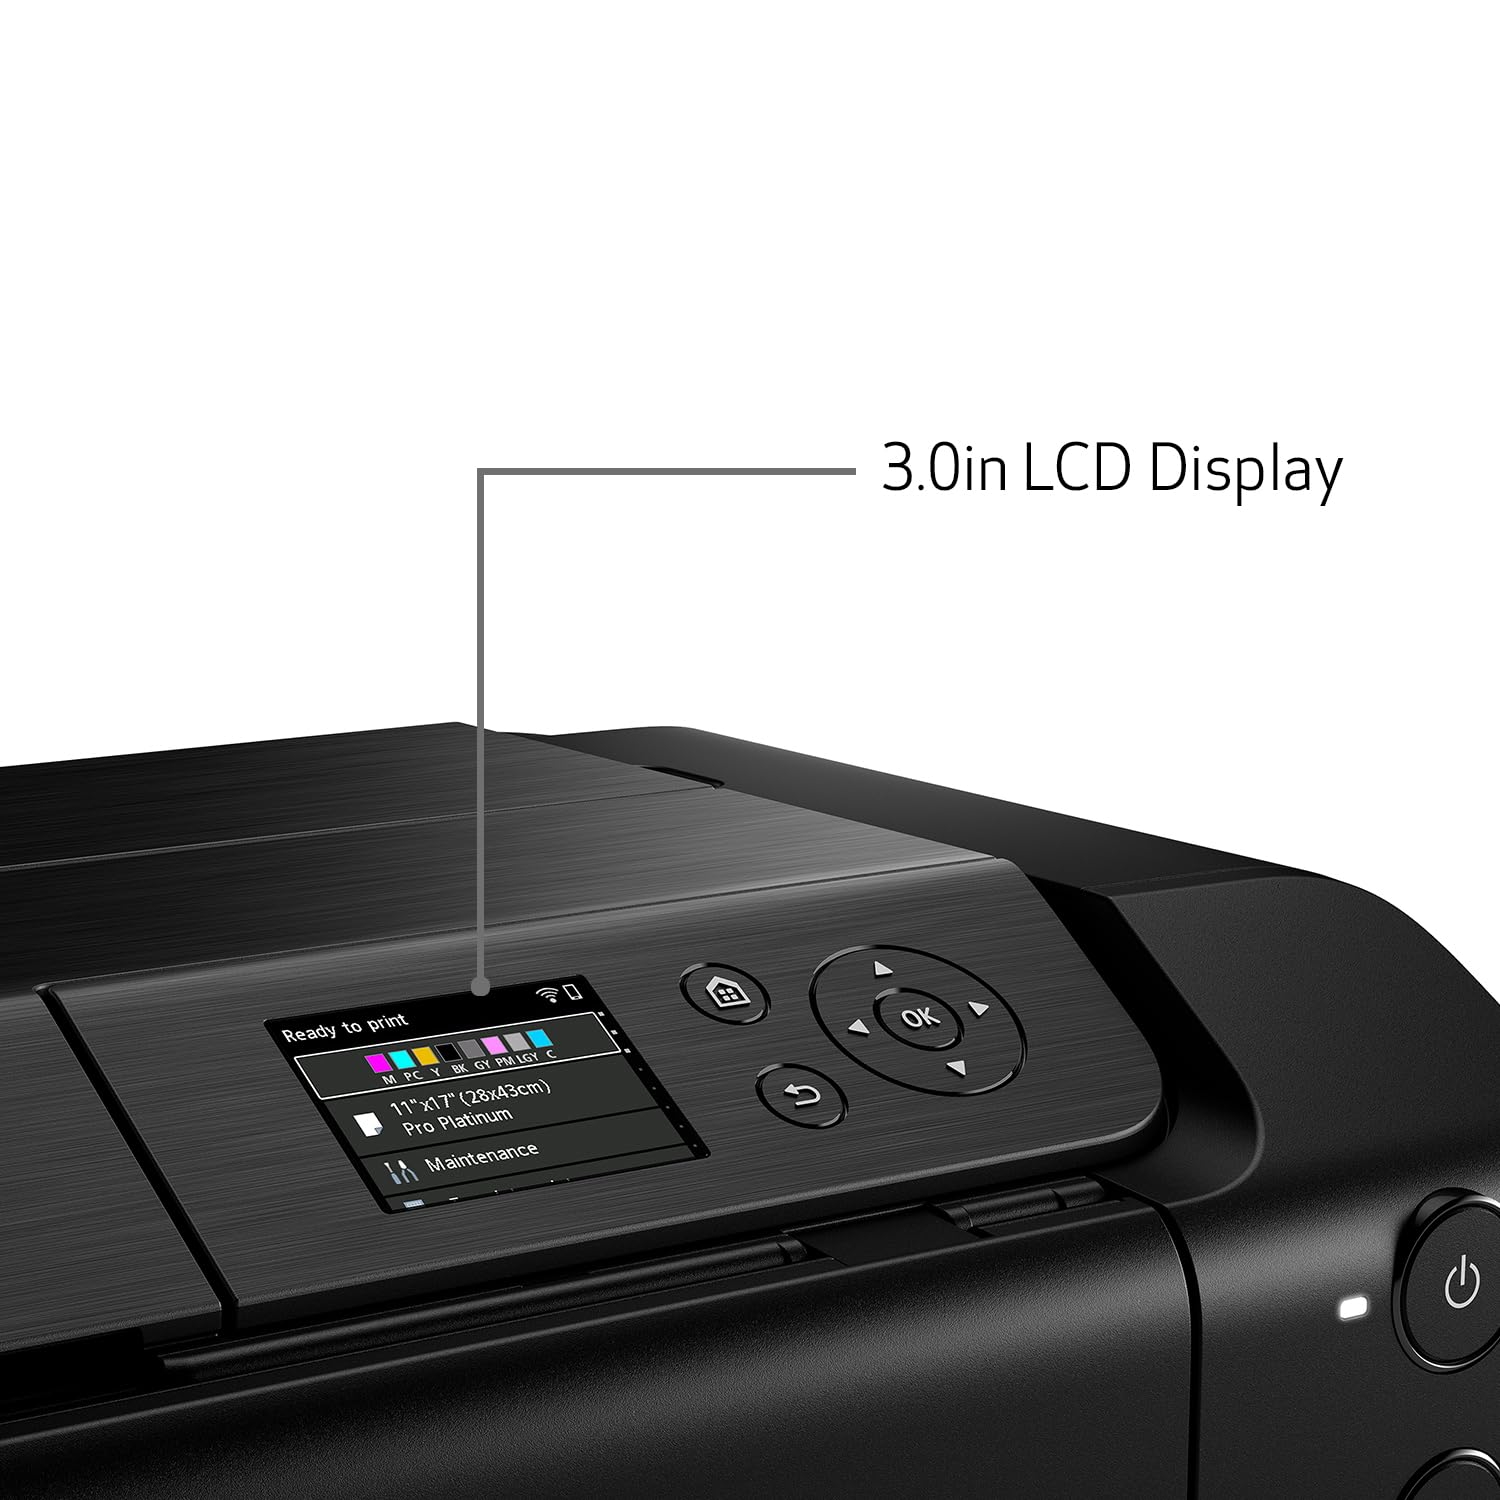 Canon PIXMA PRO-200 Wireless Professional Color Photo Printer, Prints up to 13